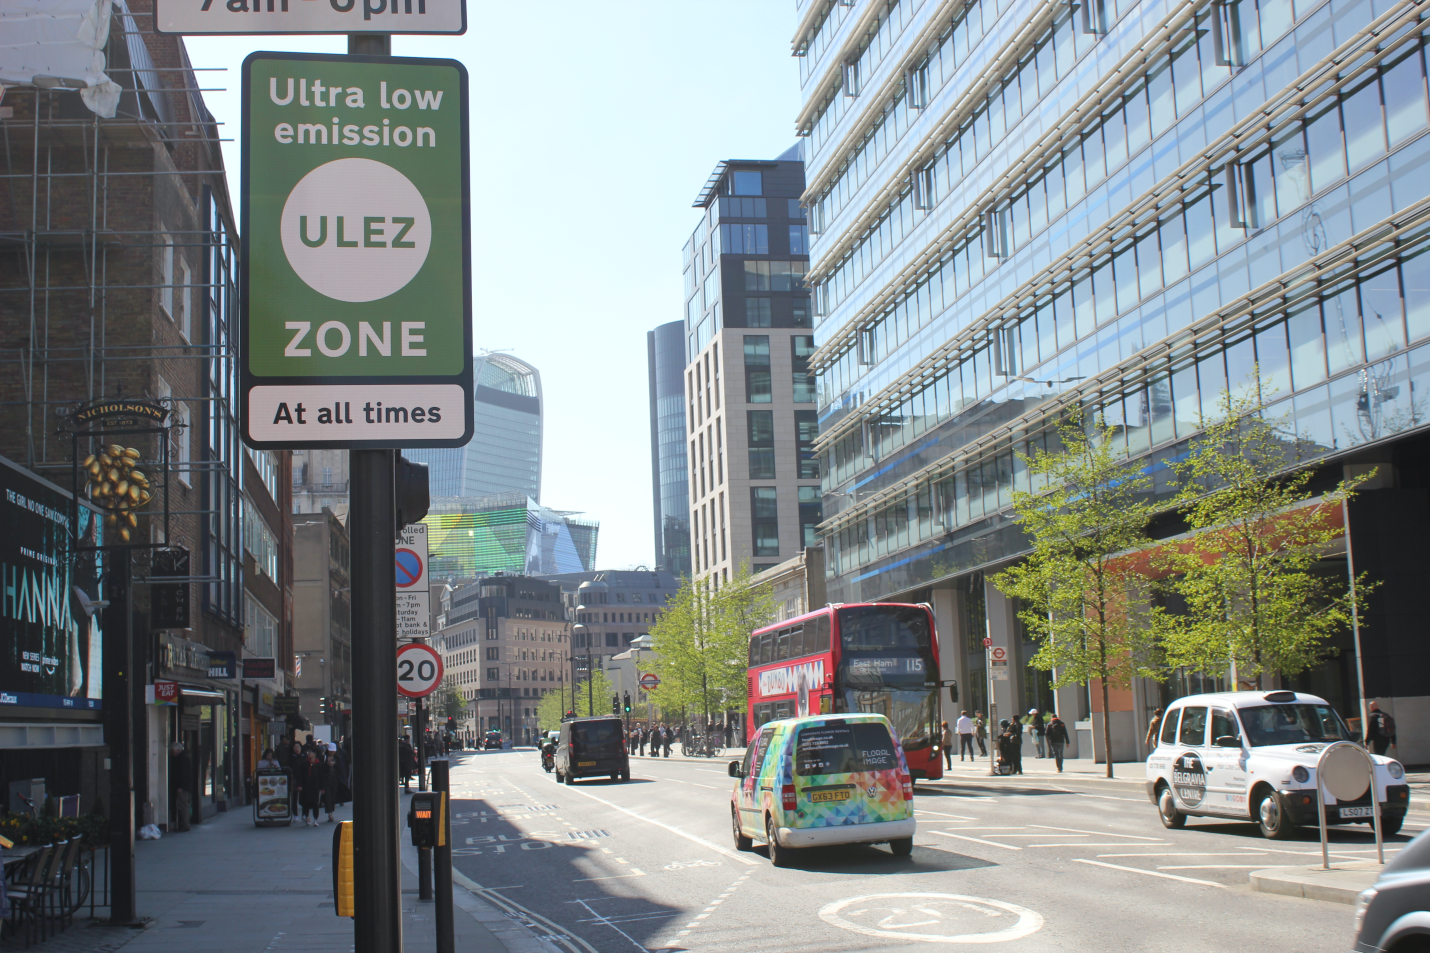  Ultra low emission zone in London